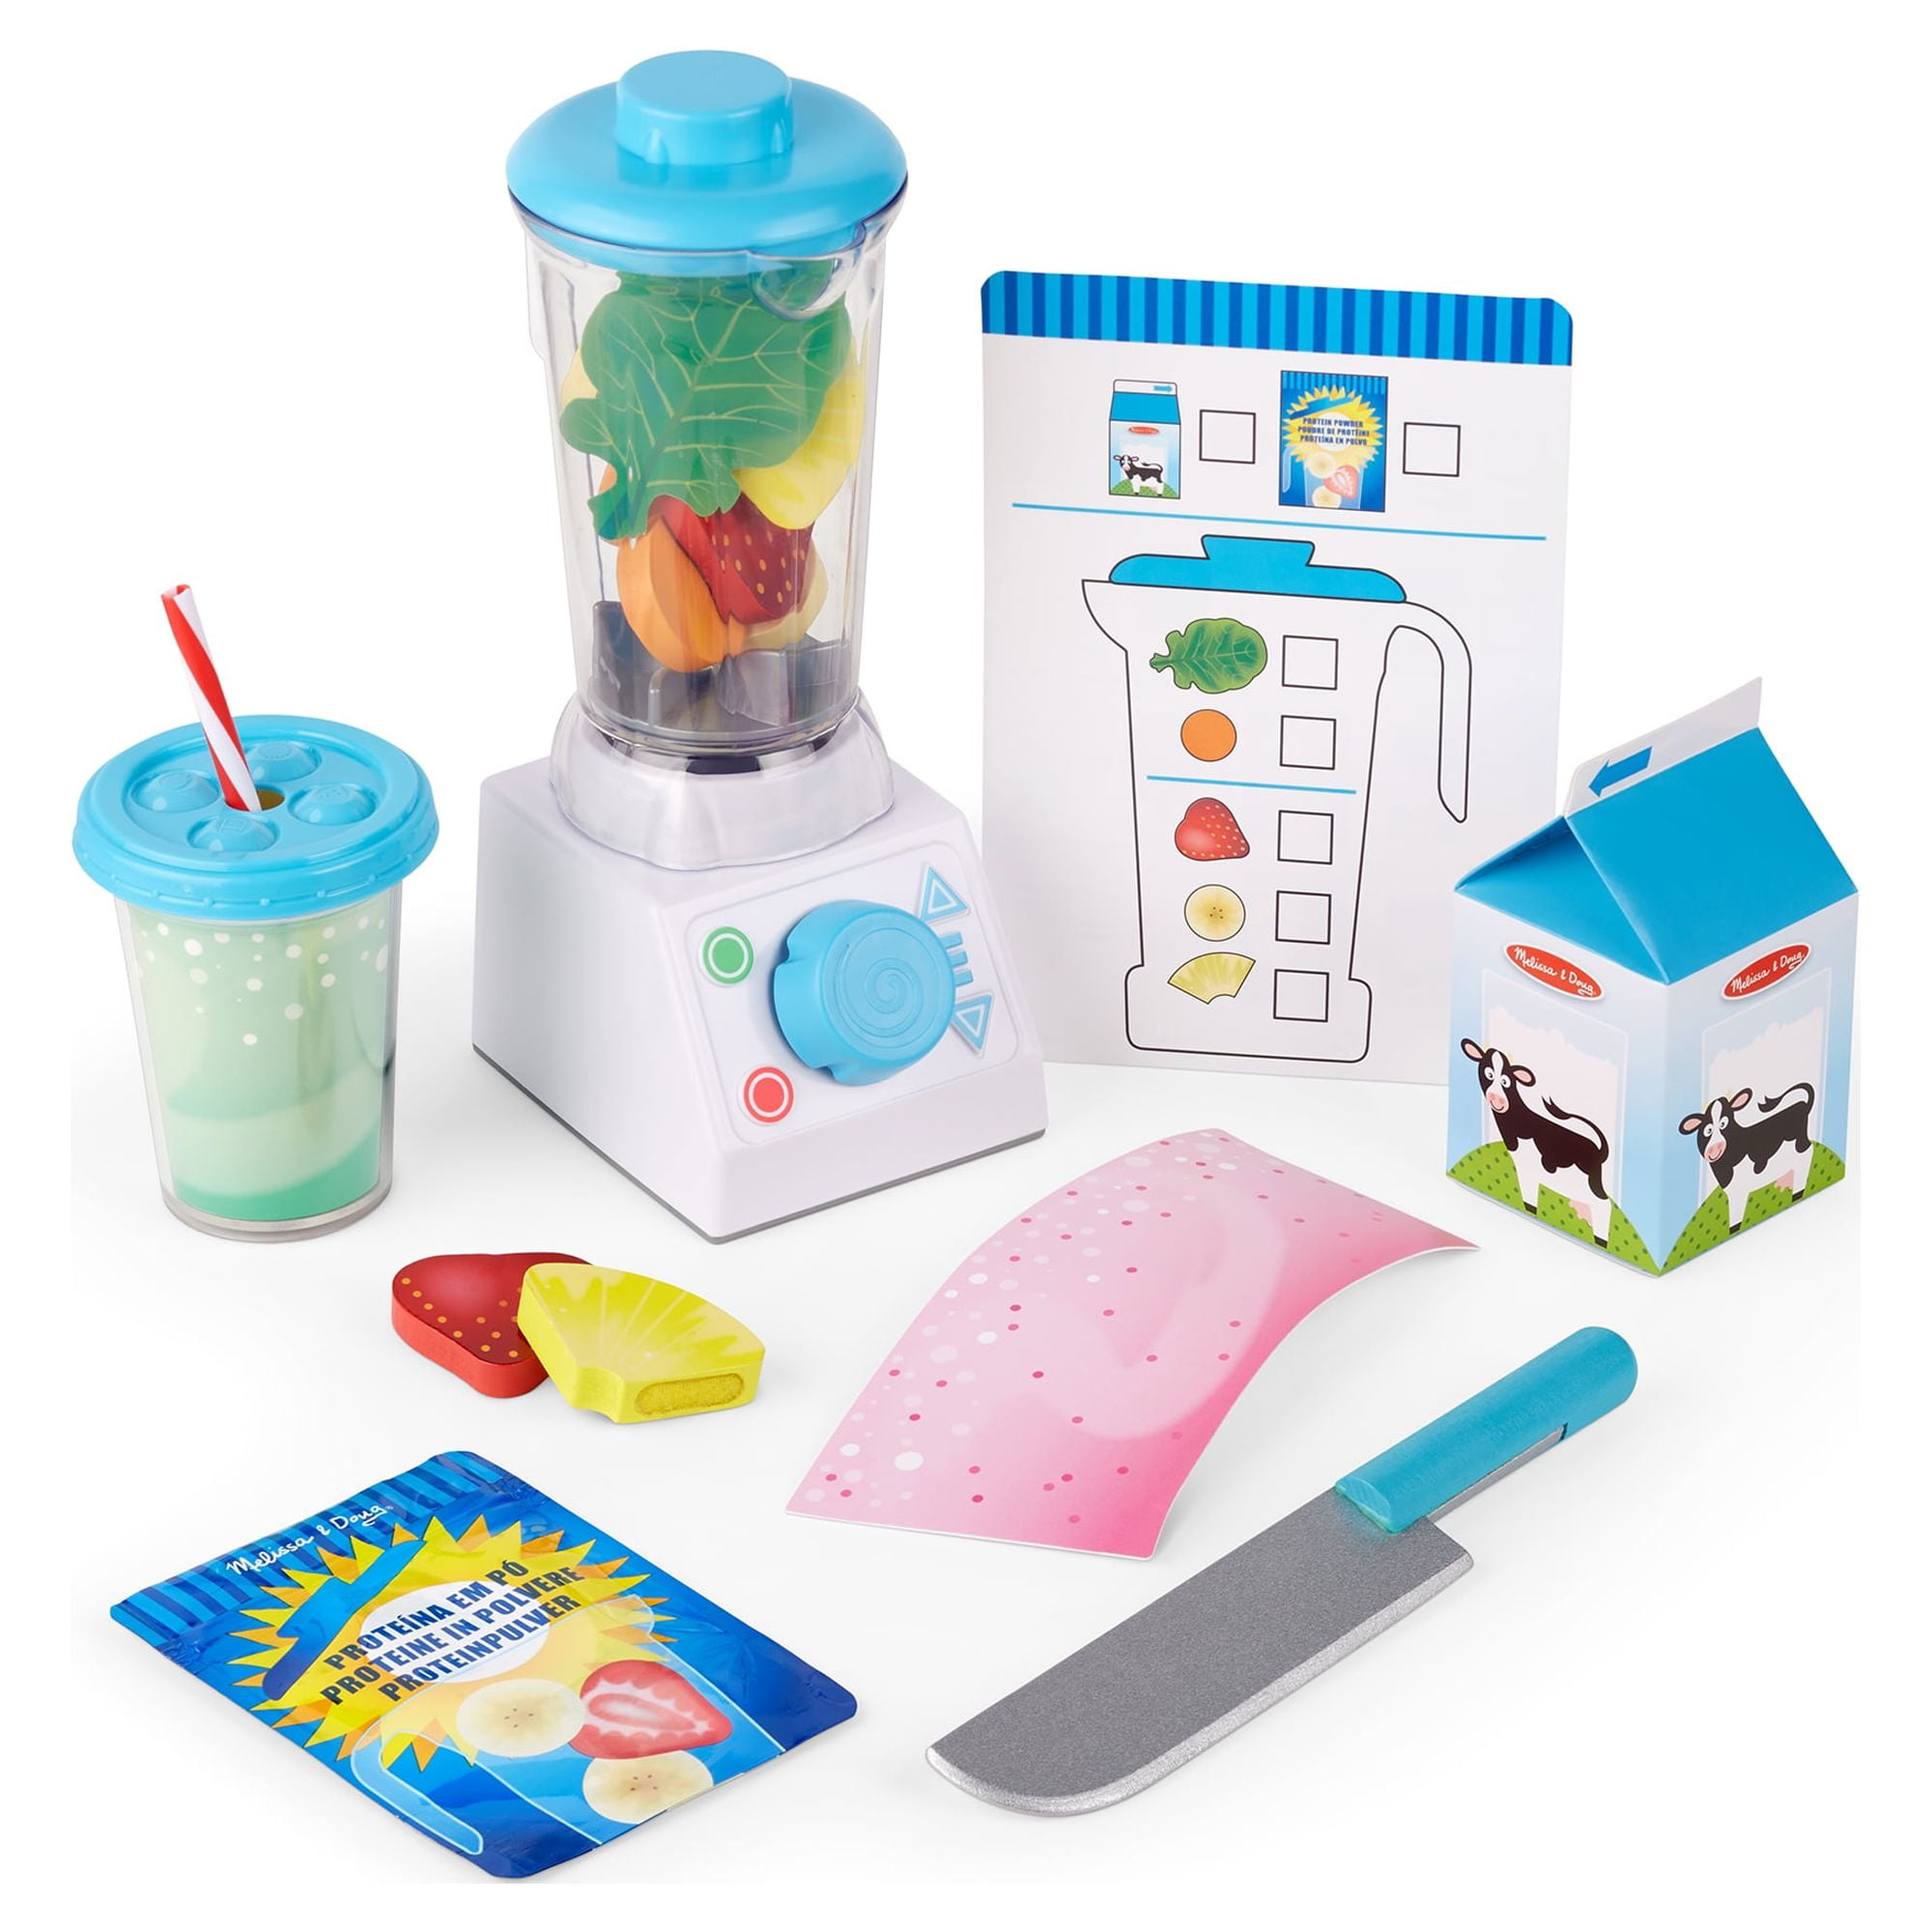 Toy Kitchen PlaysetMixer Home Learning Blender Kid Machine Smoothie  Accessories Play Gift Birthdaypreschool Maker